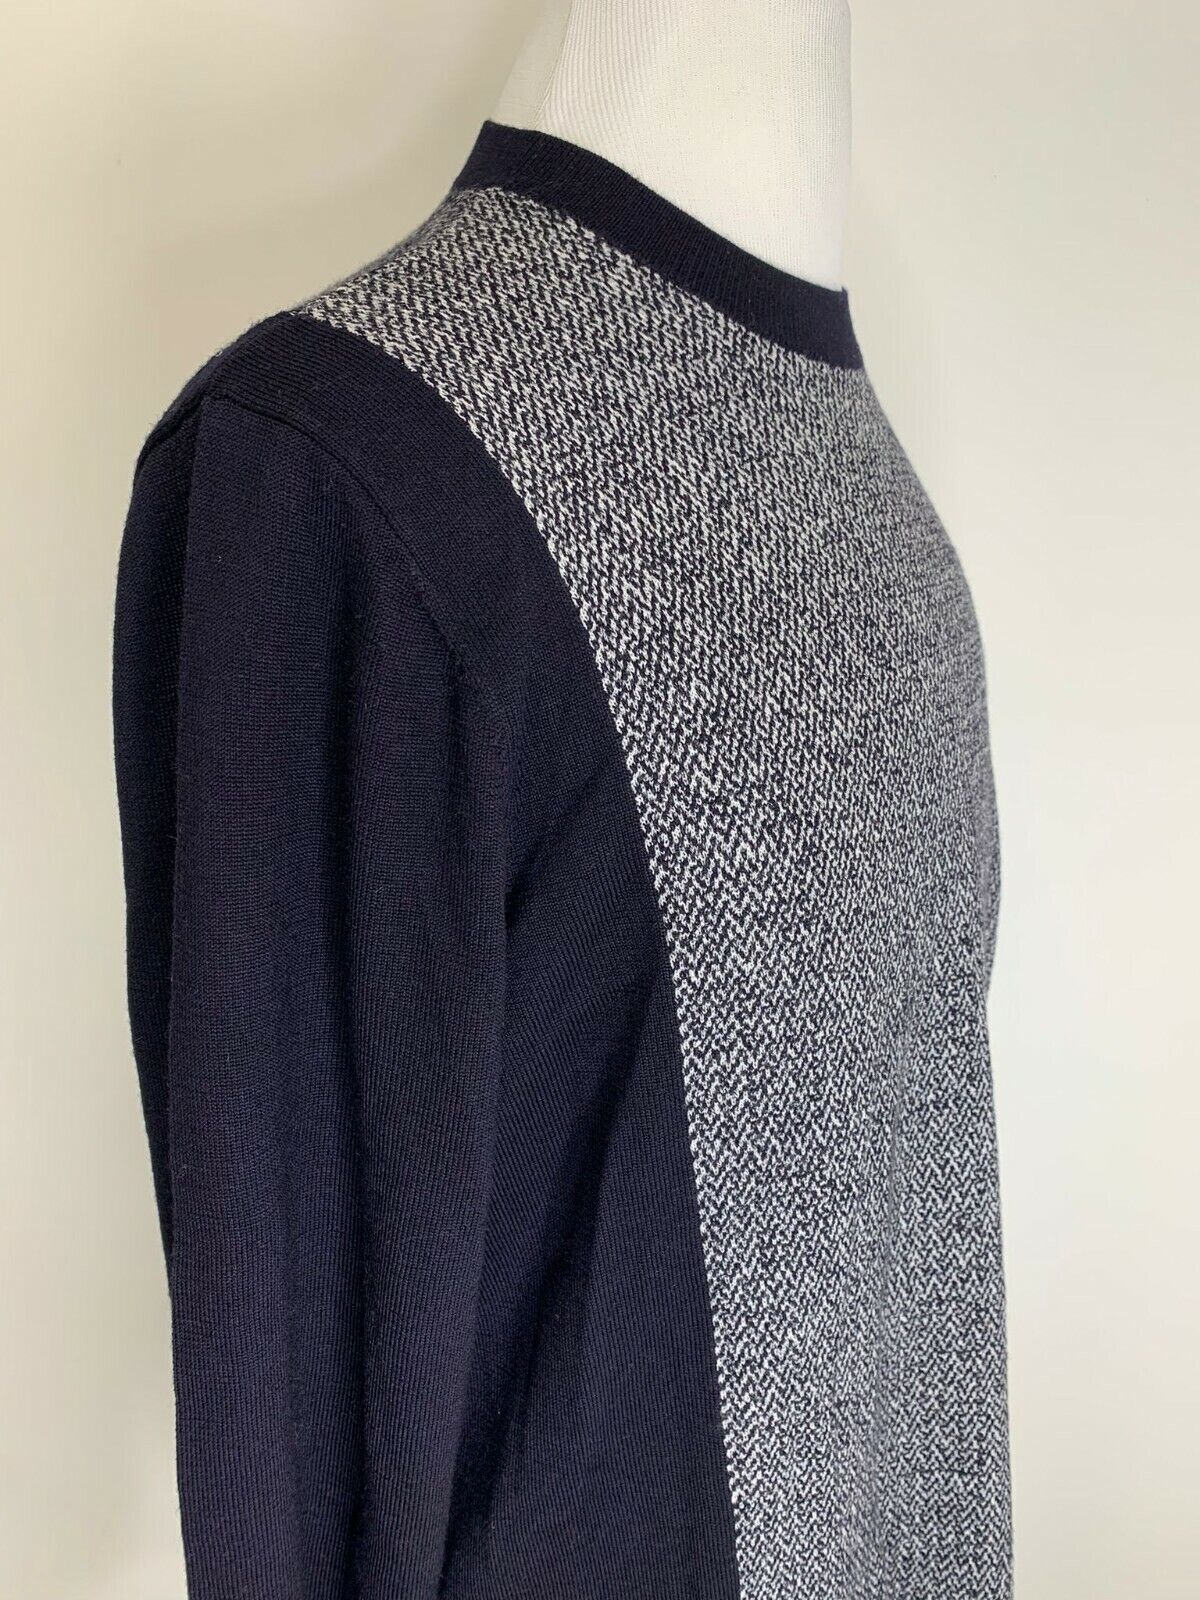 Emporio Armani Mens XXL Navy Blue Jacquard Wool Pullover Sweater Herringbone